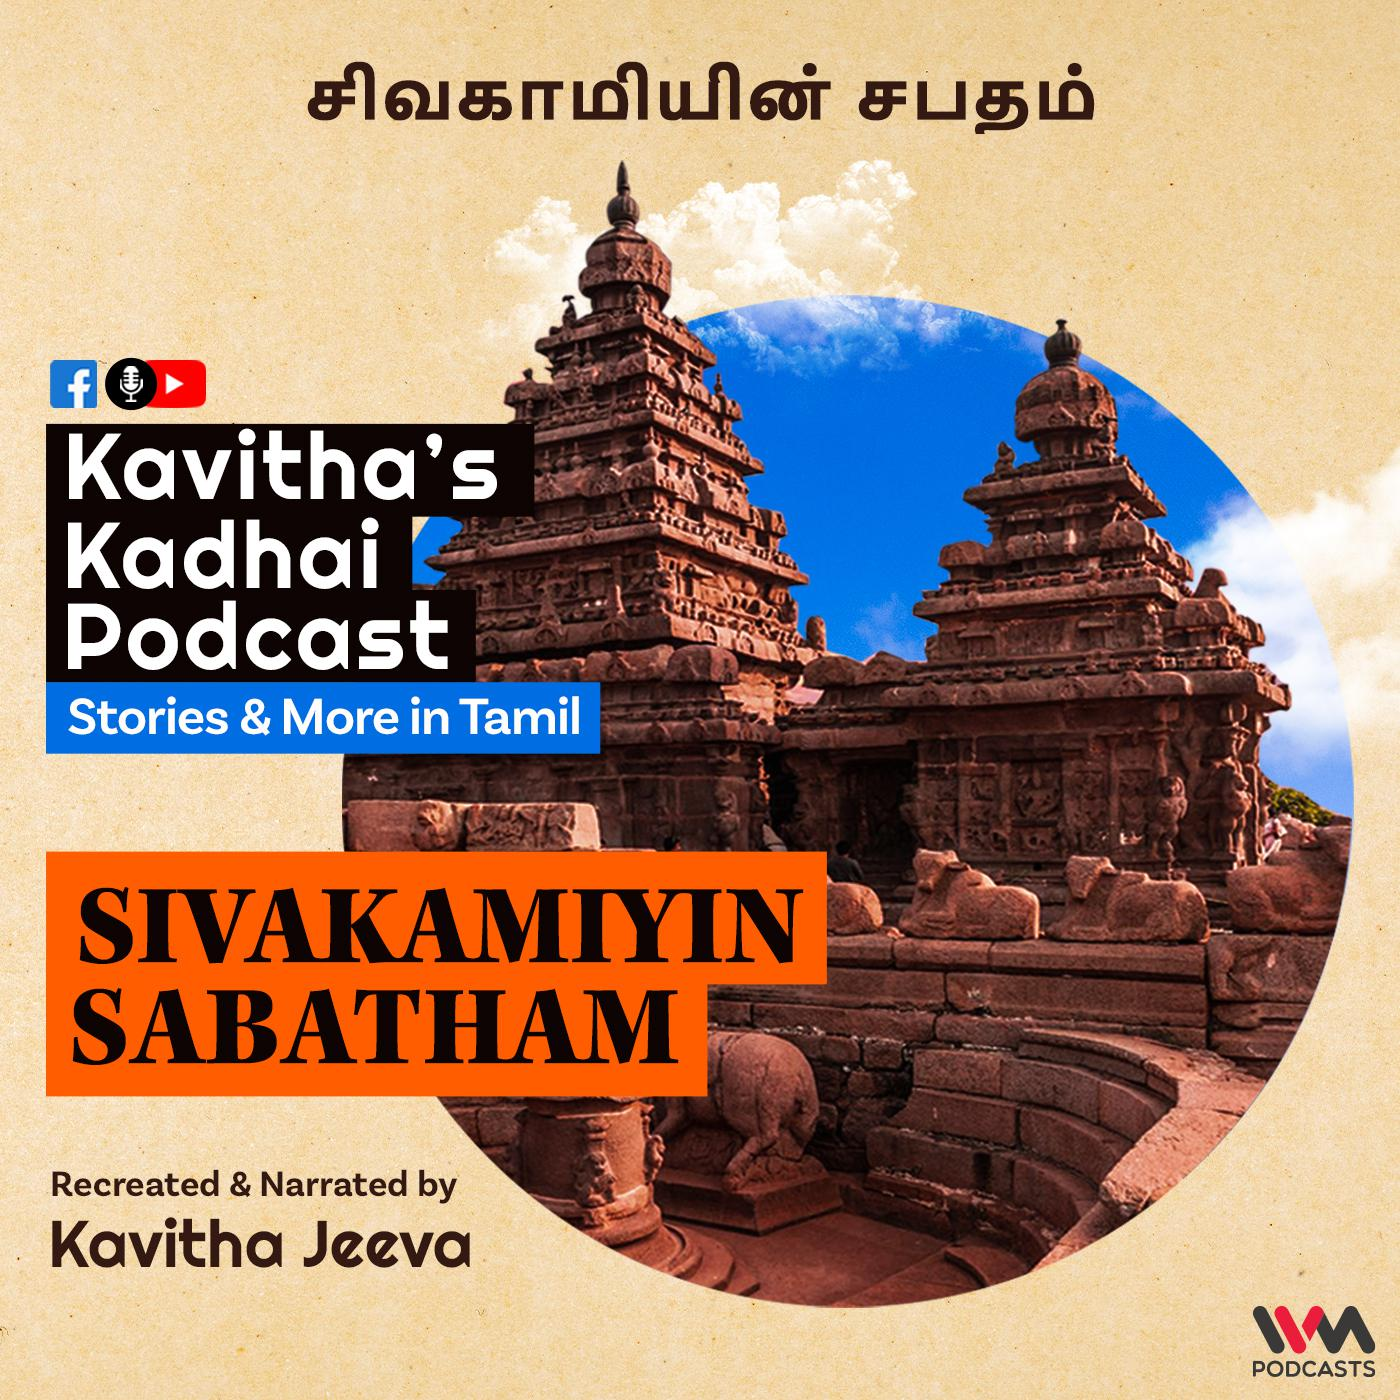 KadhaiPodcast's Sivakamiyin Sabatham with Kavitha Jeeva - Episode #127